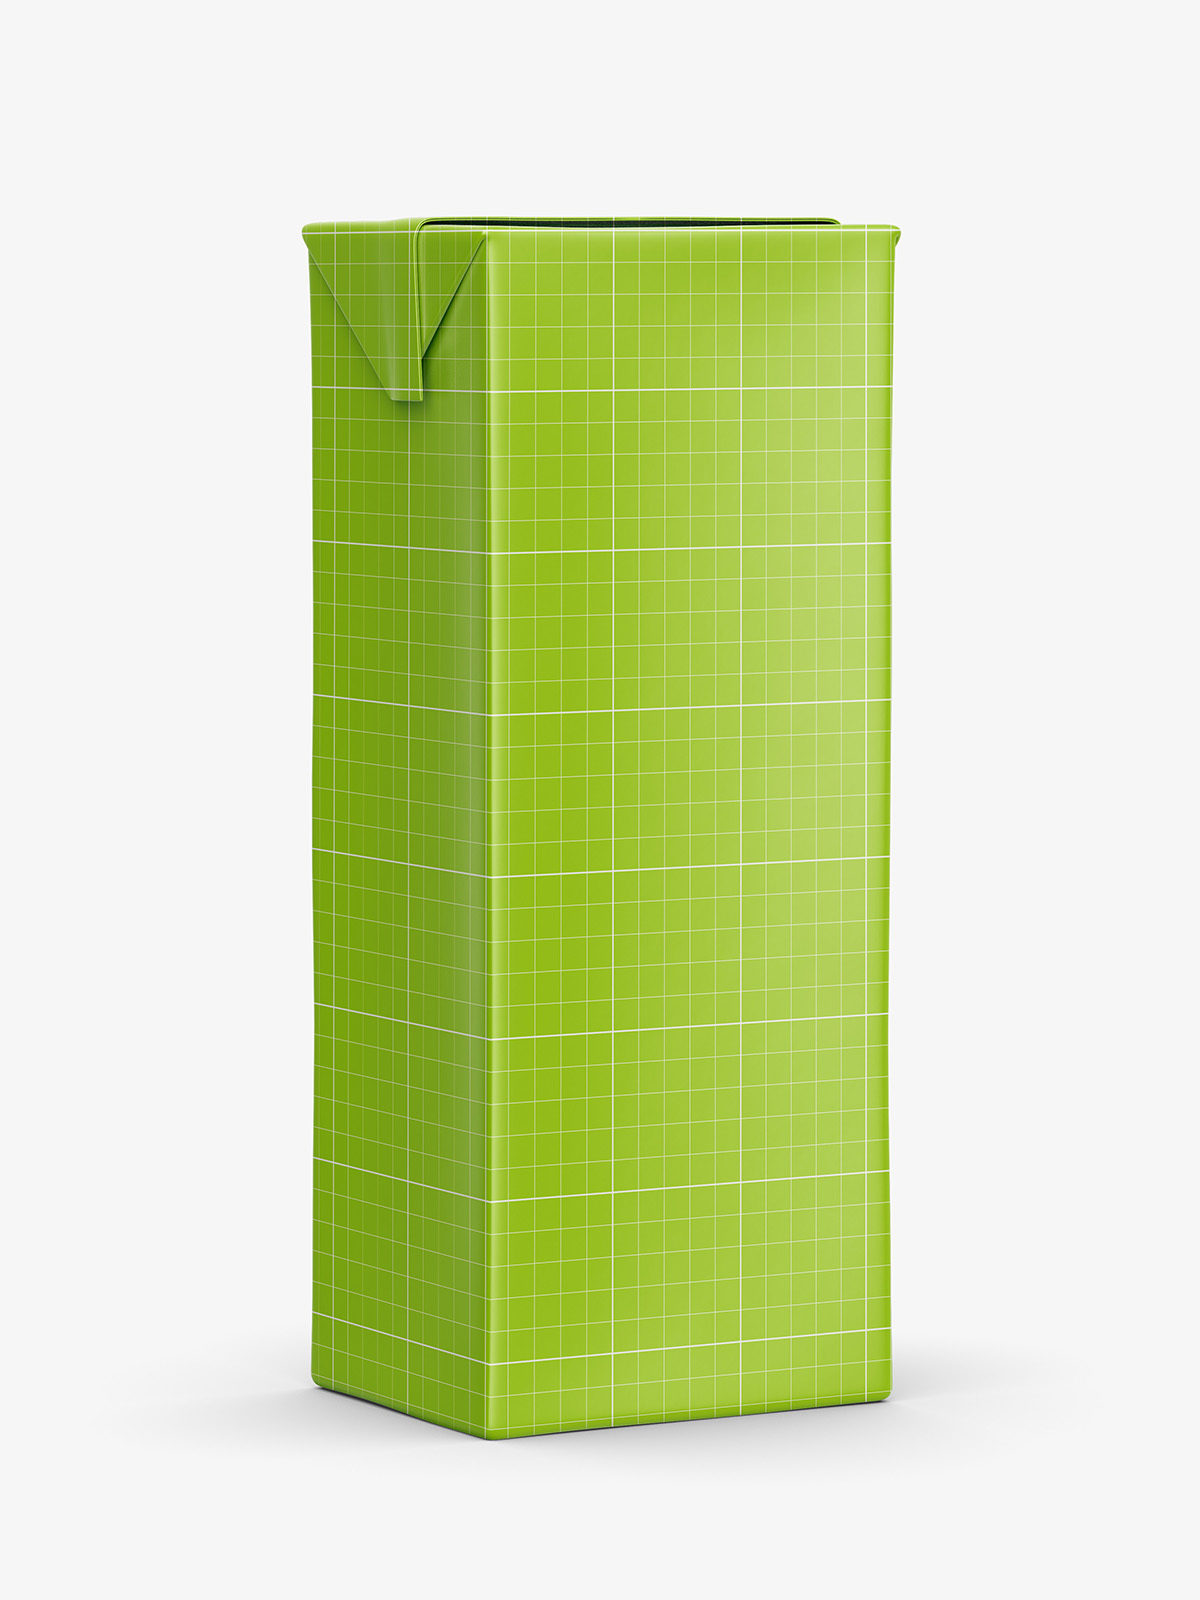 Download Small juice carton mockup - Smarty Mockups